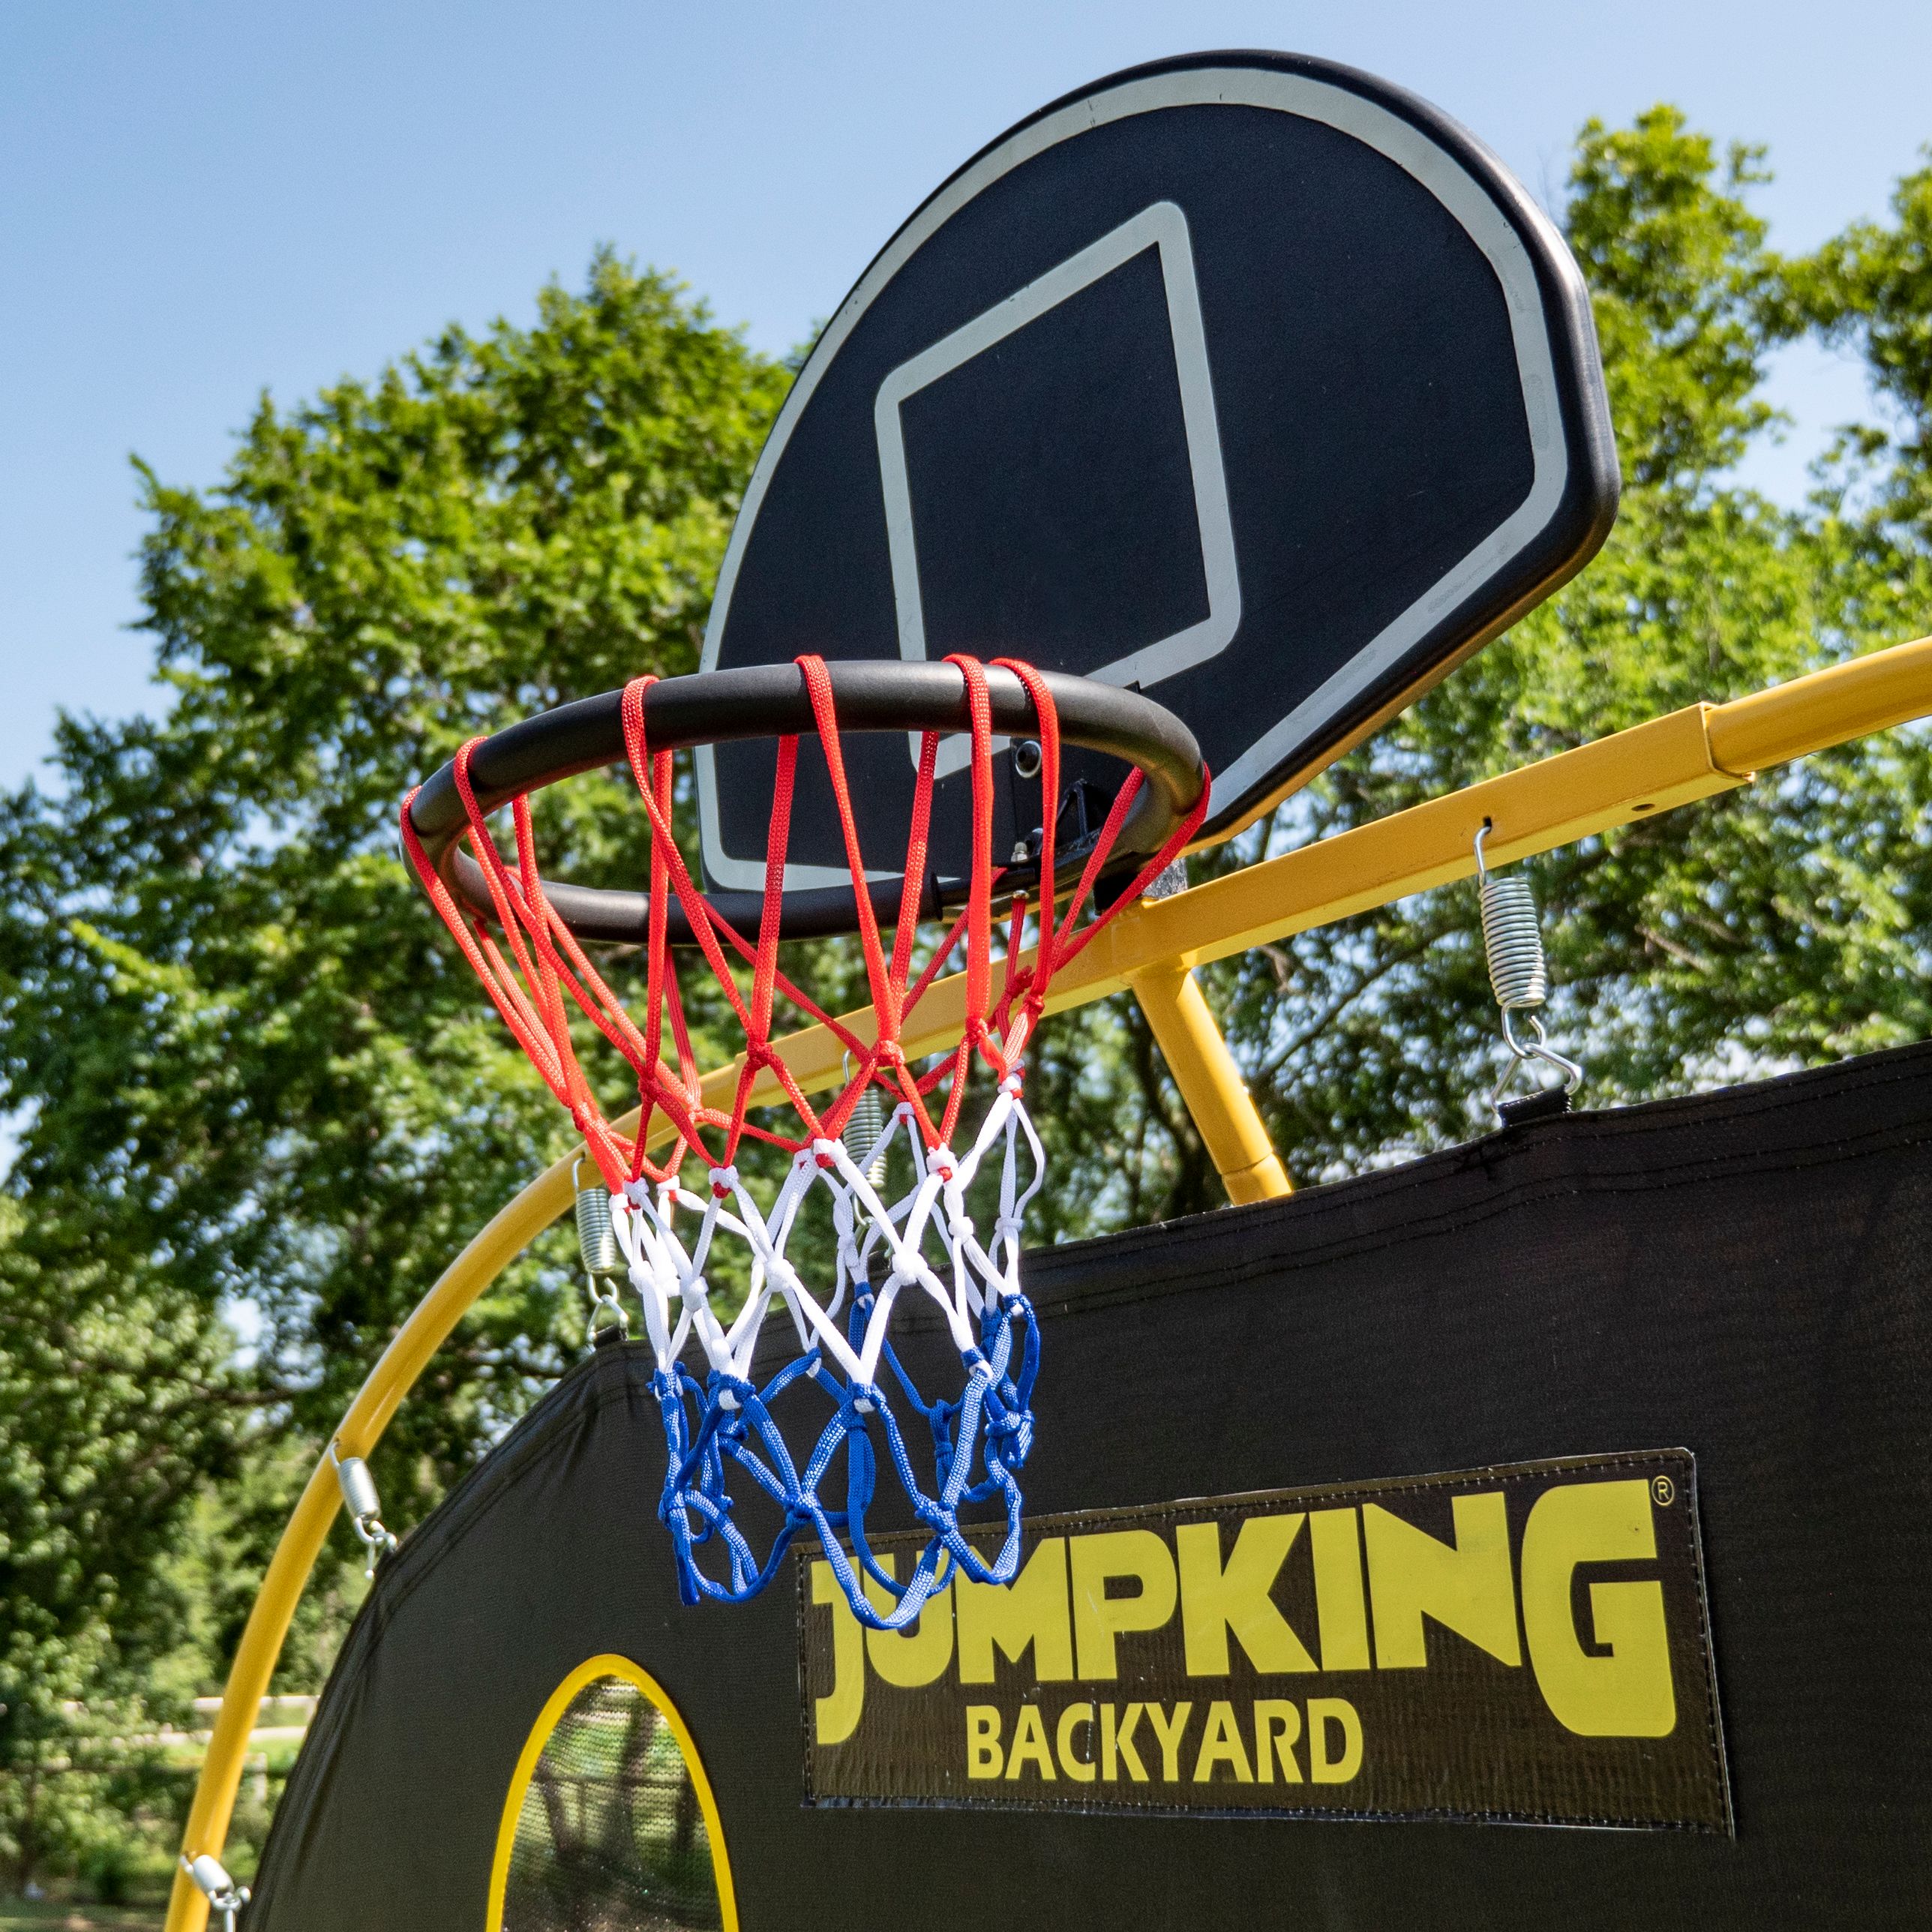 Jumpking Backyard 3 in 1 Trainer (Basketball, Football, Soccer) Yellow&Black - image 3 of 8